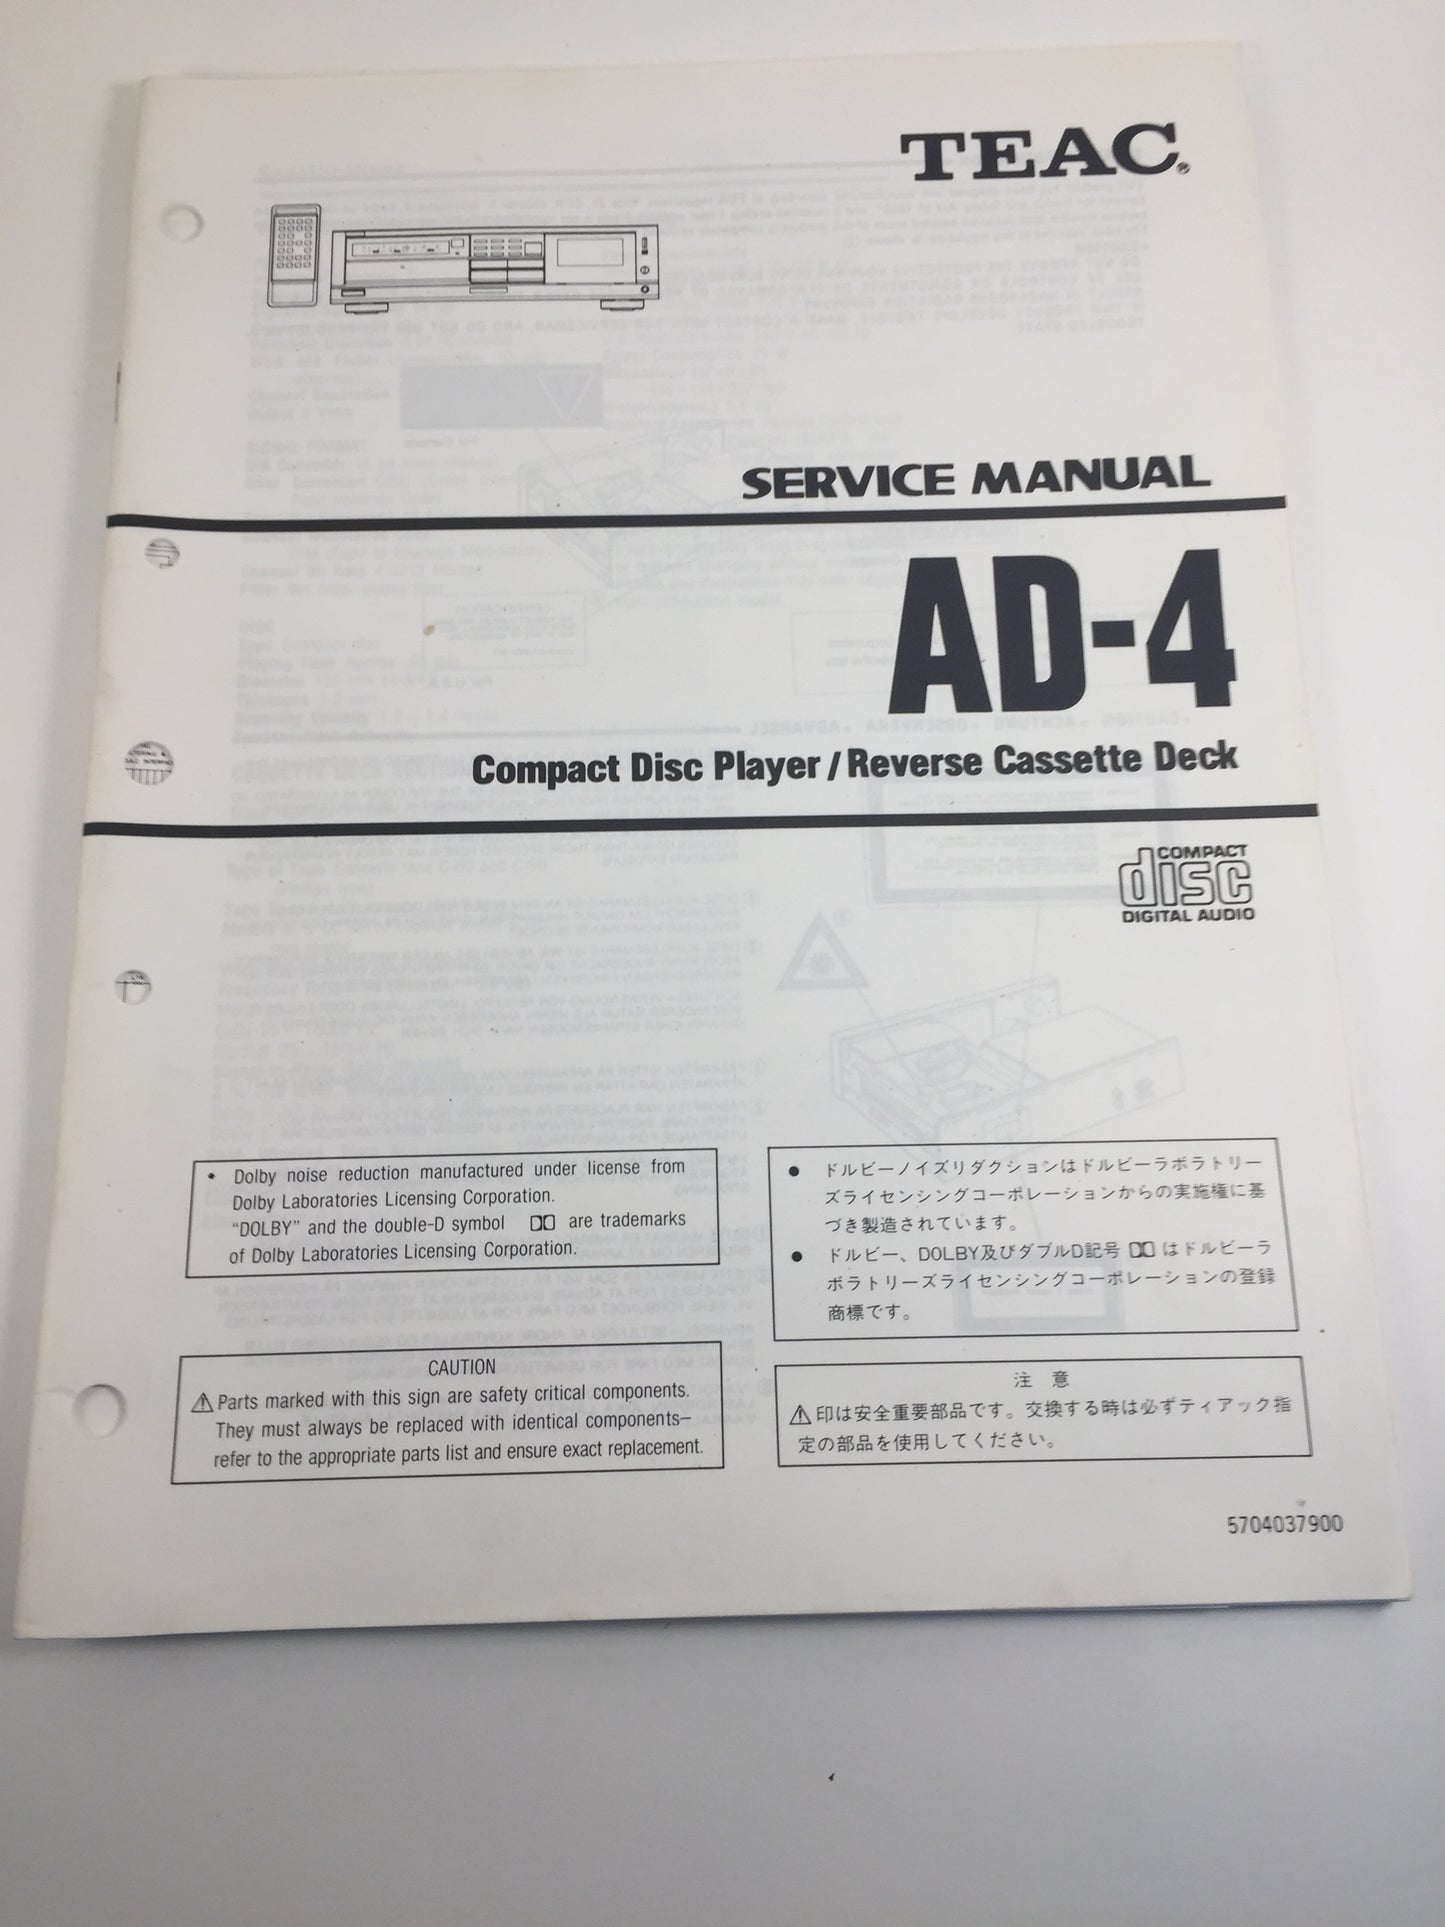 TEAC AD-4 Compact Disc Player/Reverse Cassette Deck Service Manual